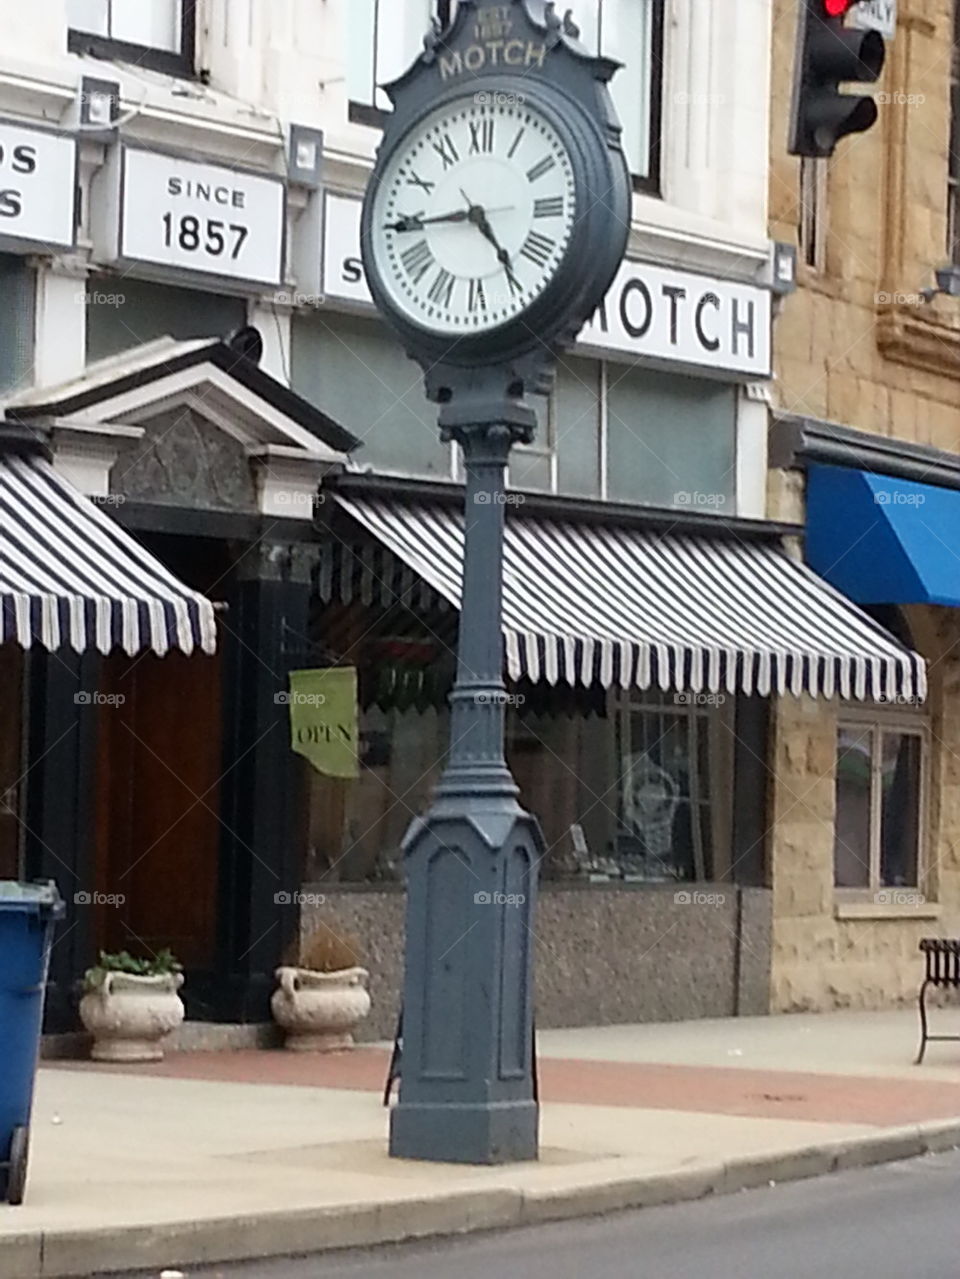 Motch Street Clock